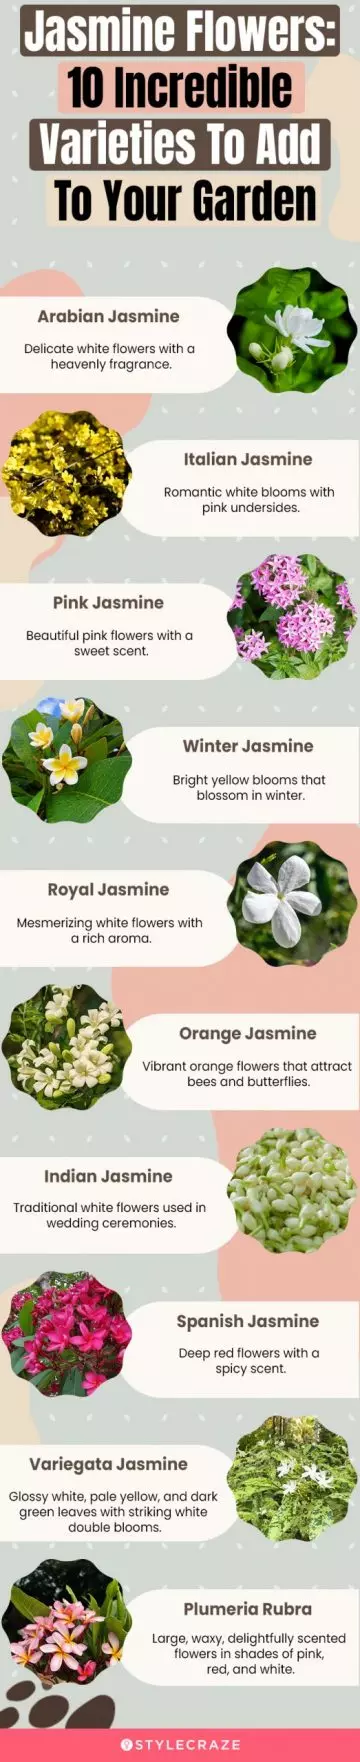 jasmine flowers 10 incredible varieties to add to your garden (infographic)